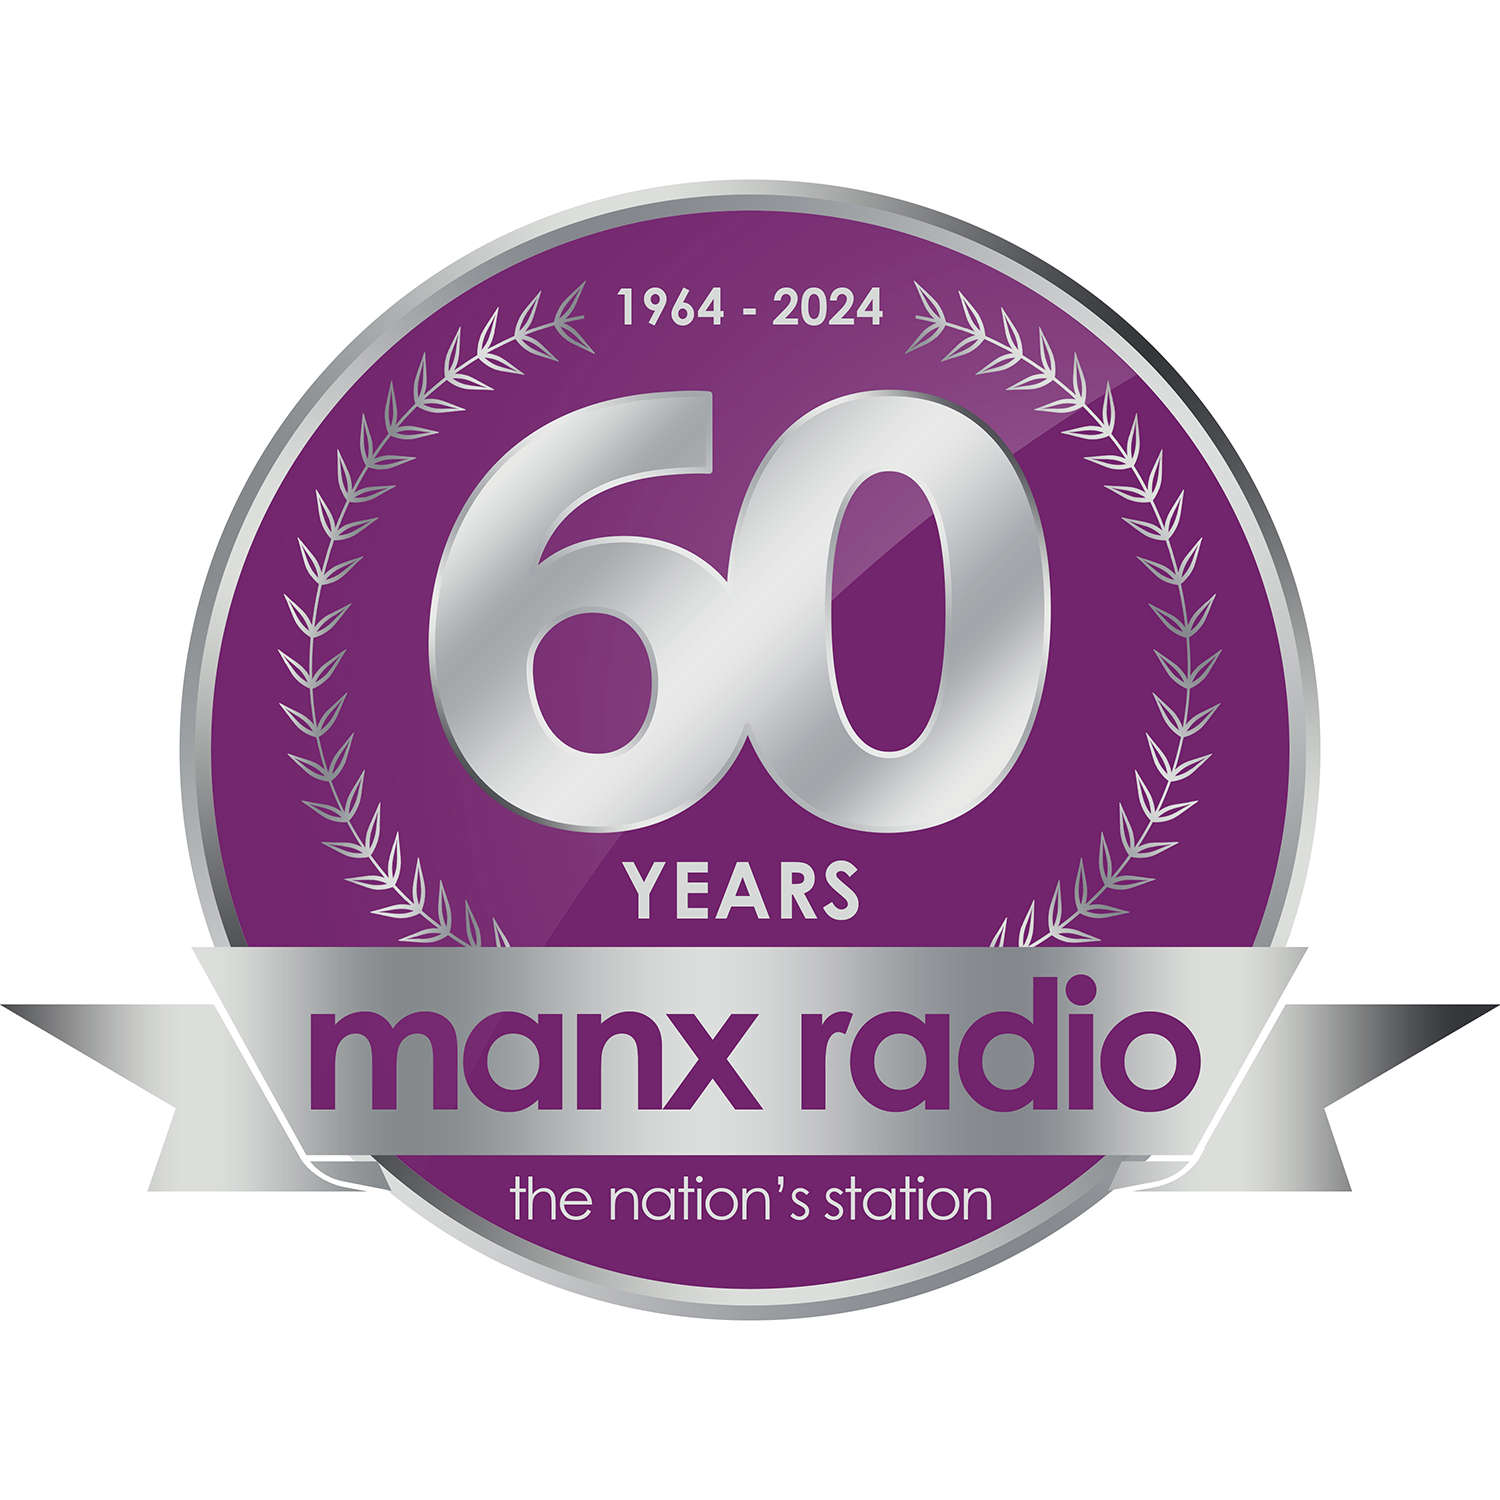 Manx Radio: 60 Years Serving the Nation